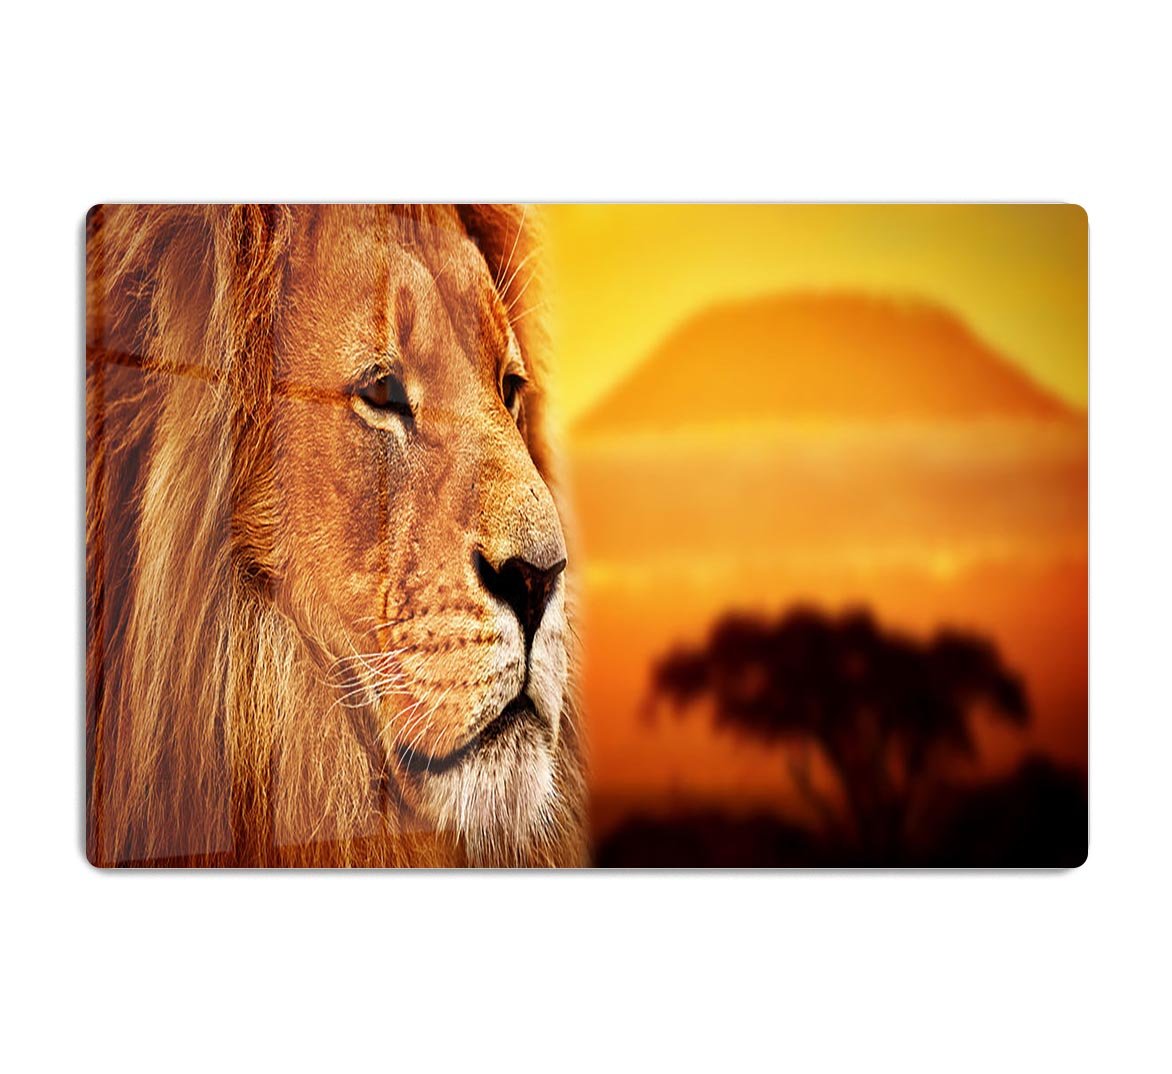 Lion portrait on savanna landscape HD Metal Print - Canvas Art Rocks - 1